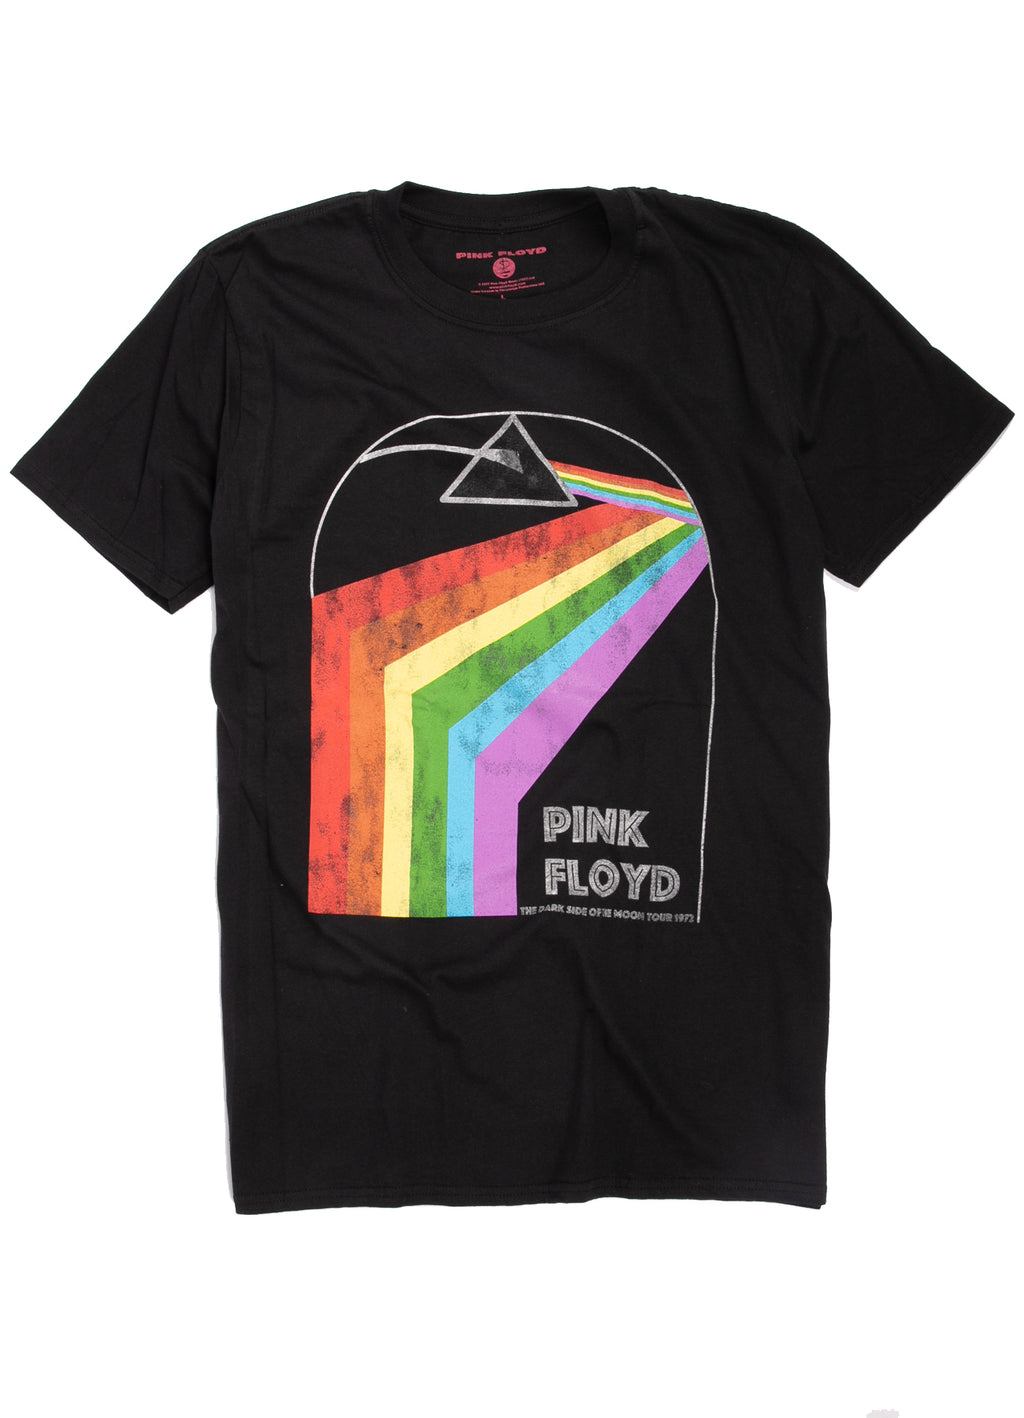 Pink Floyd "Dark Side Of The Moon" t-shirt.